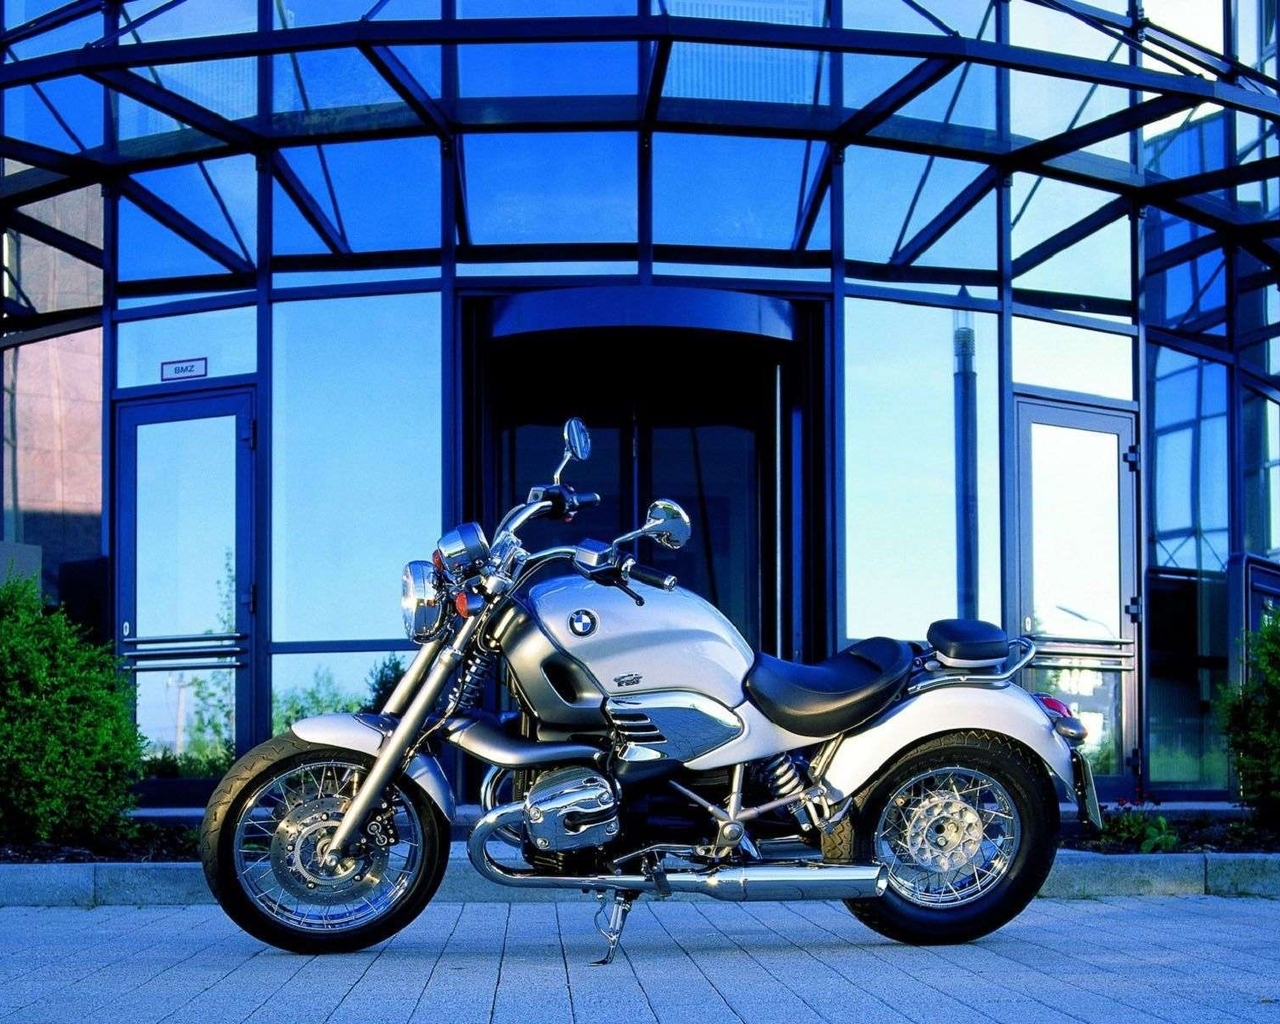 Image: Motorcycle, bike, BMW, silver, building